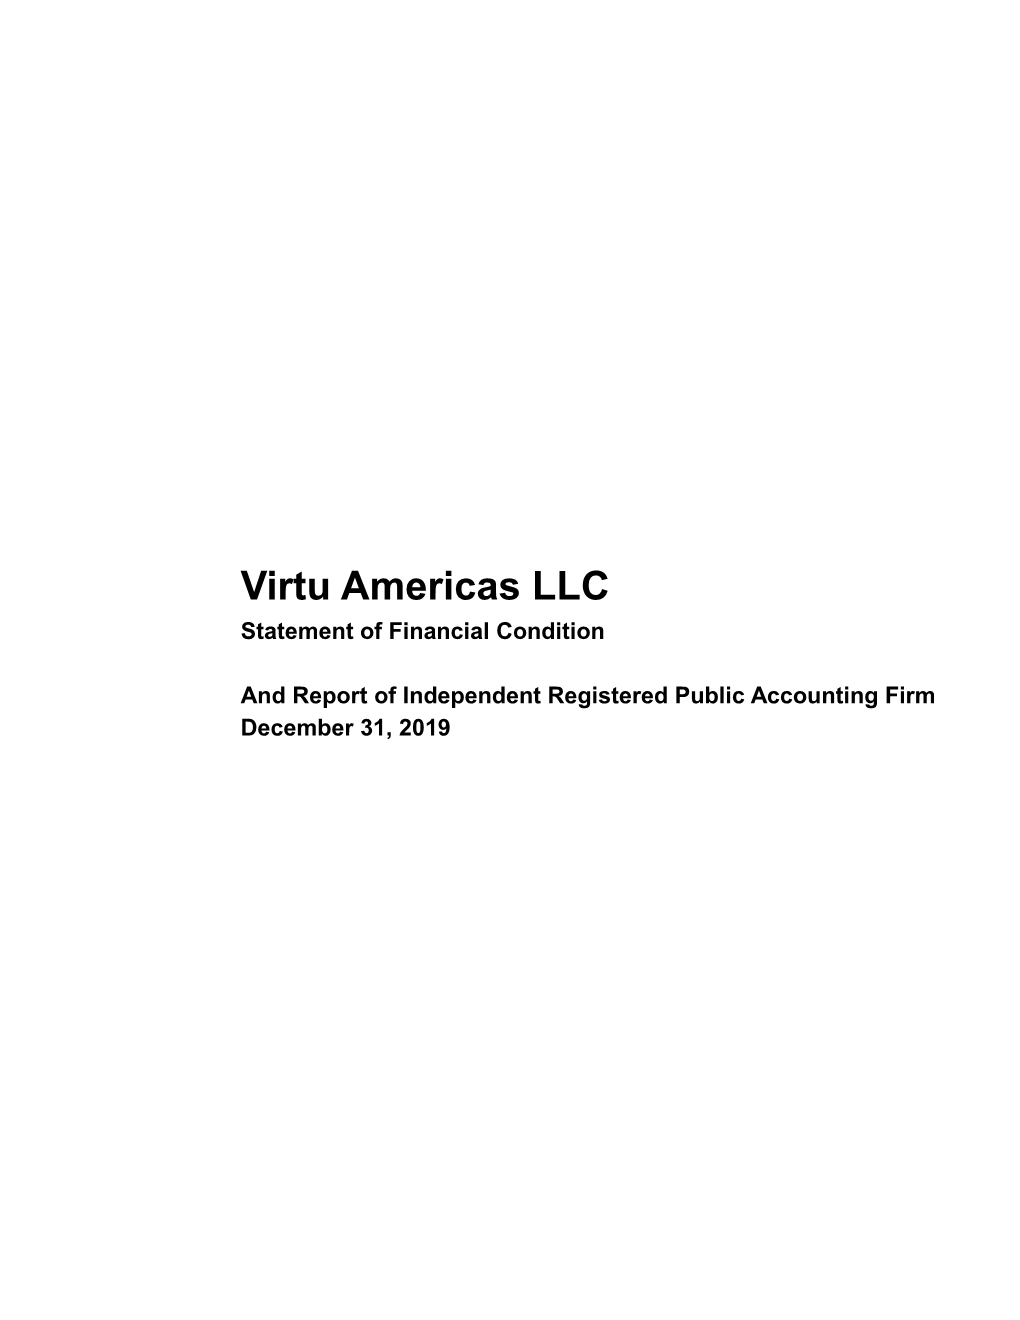 Virtu Americas LLC Statement of Financial Condition